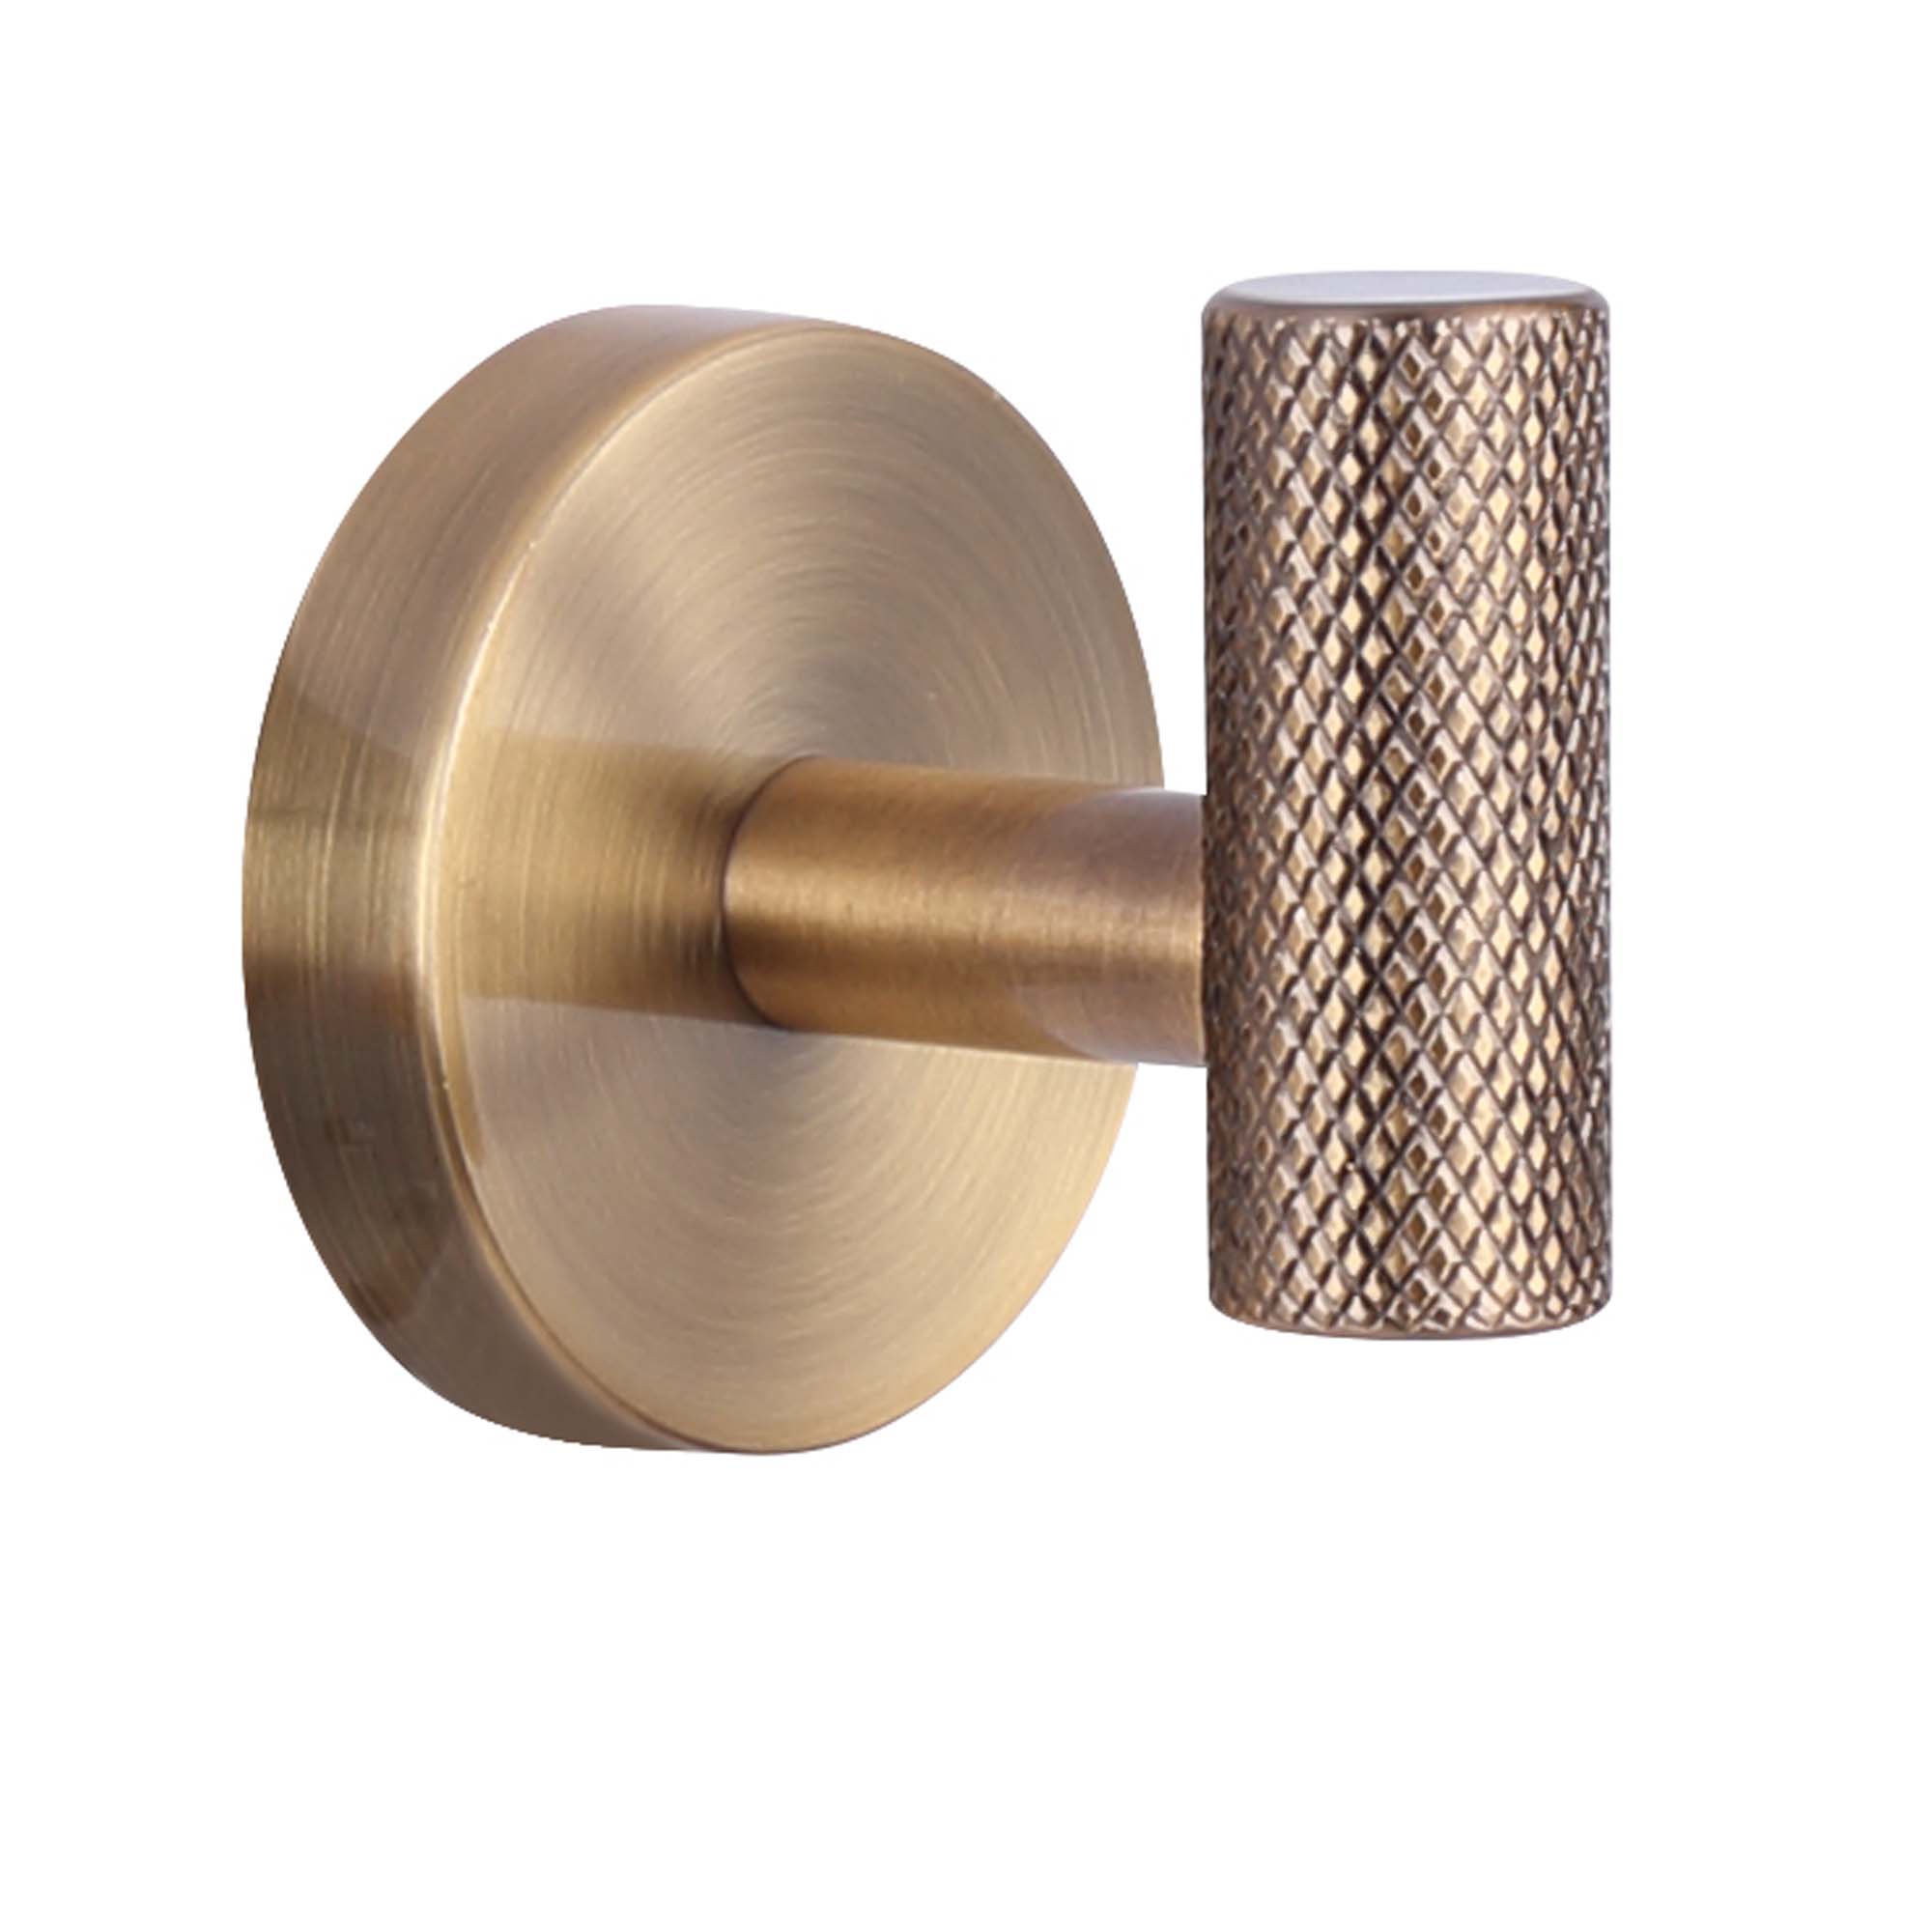 VAREN Decorative accessory Gold - BA108A02GD | CANARM